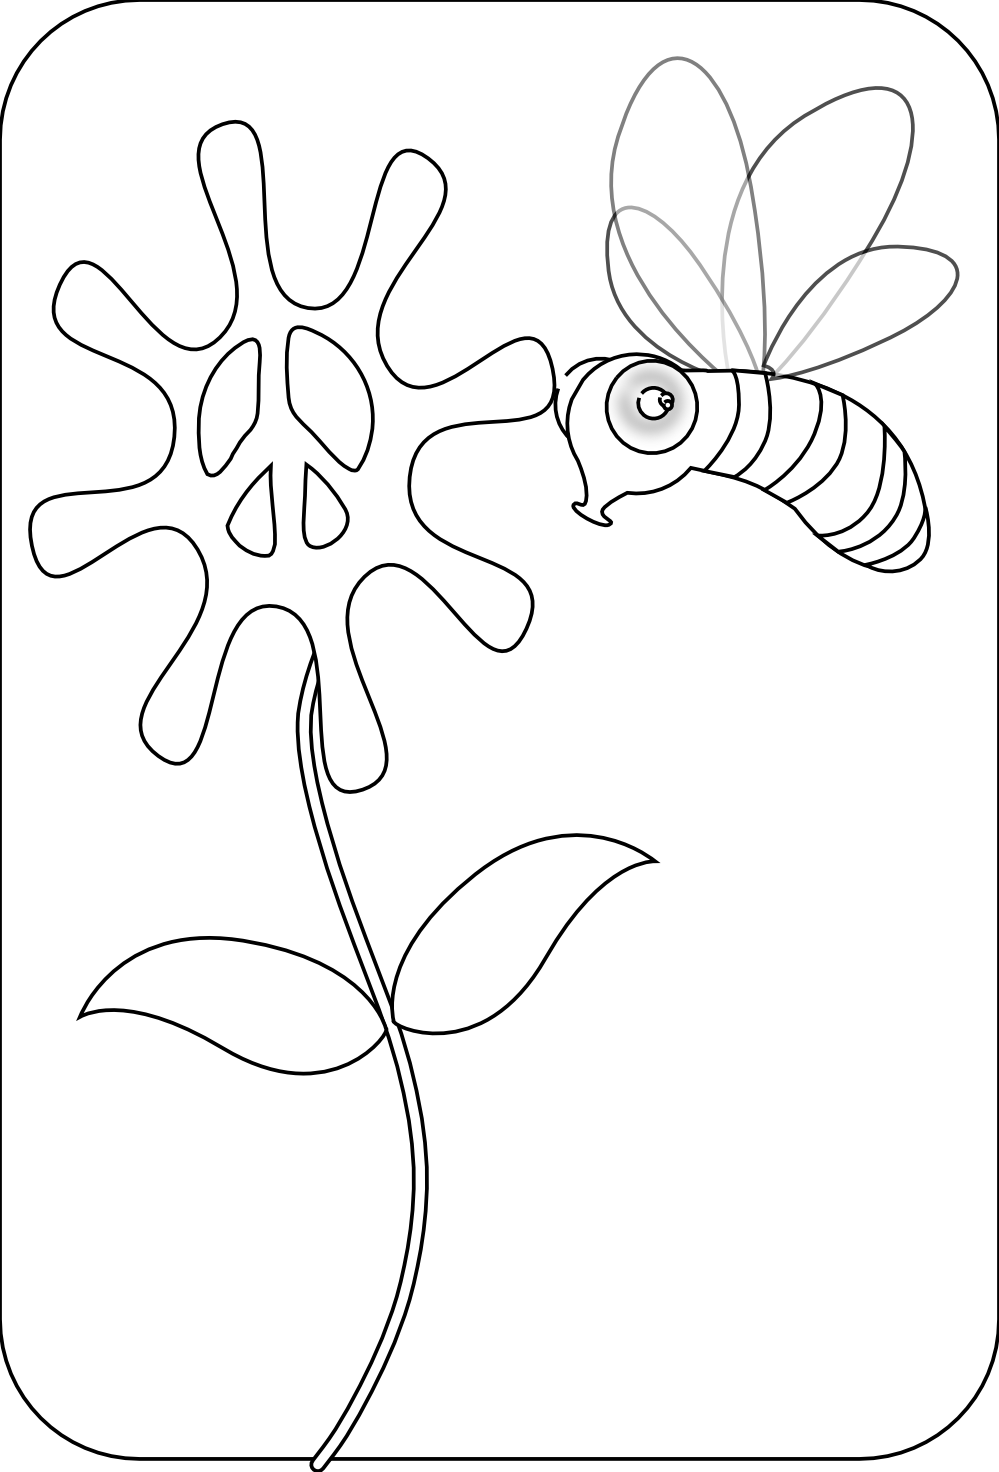 Black  White Flower Tattoos - Clipart library